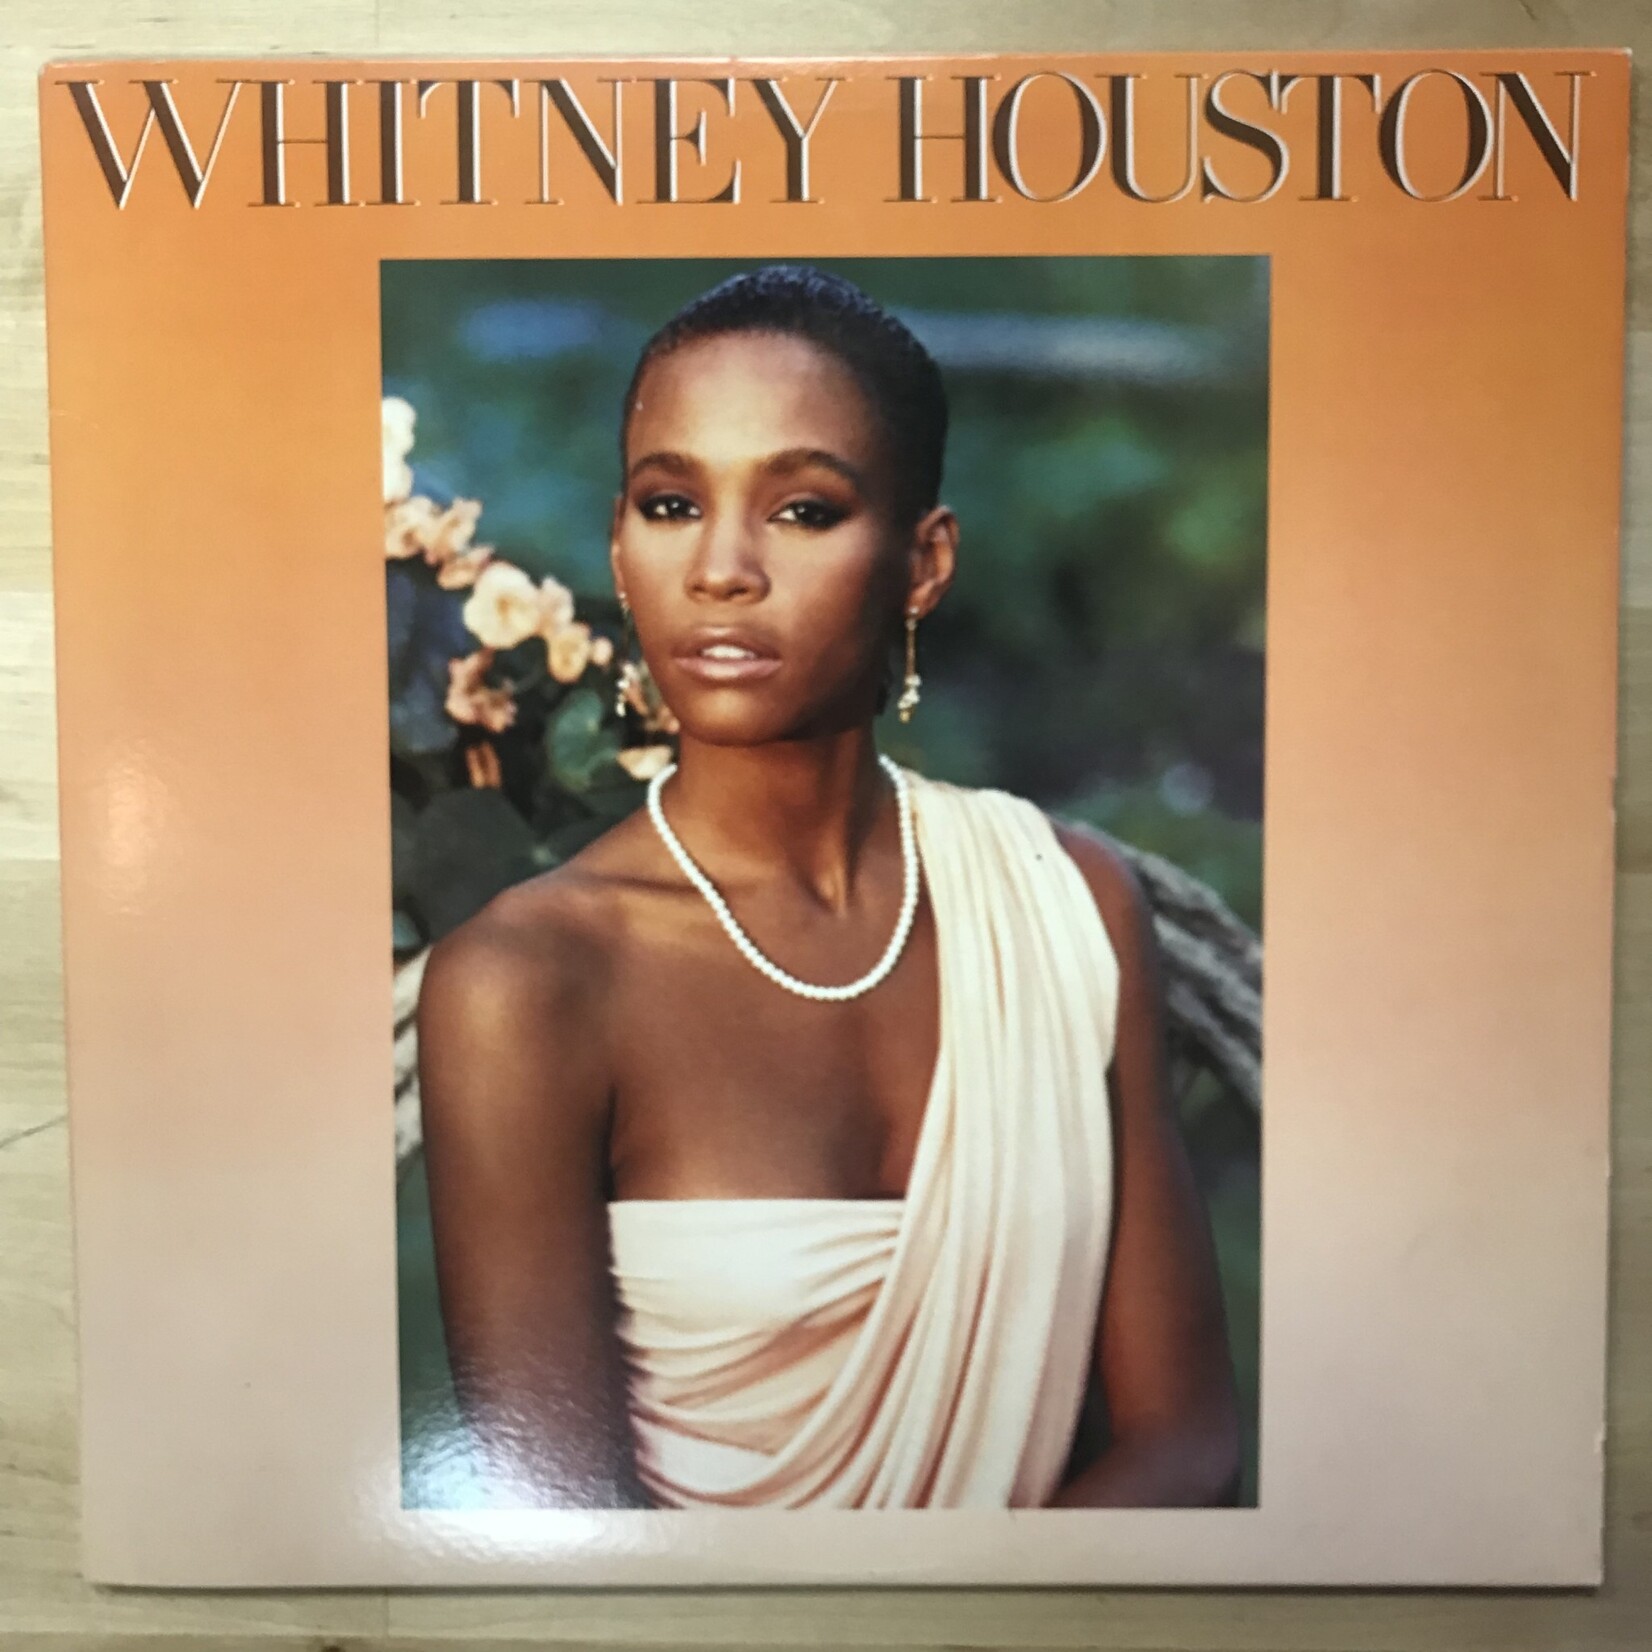 Whitney Houston - Whitney Houston - AL8 8212 - Vinyl LP (USED)